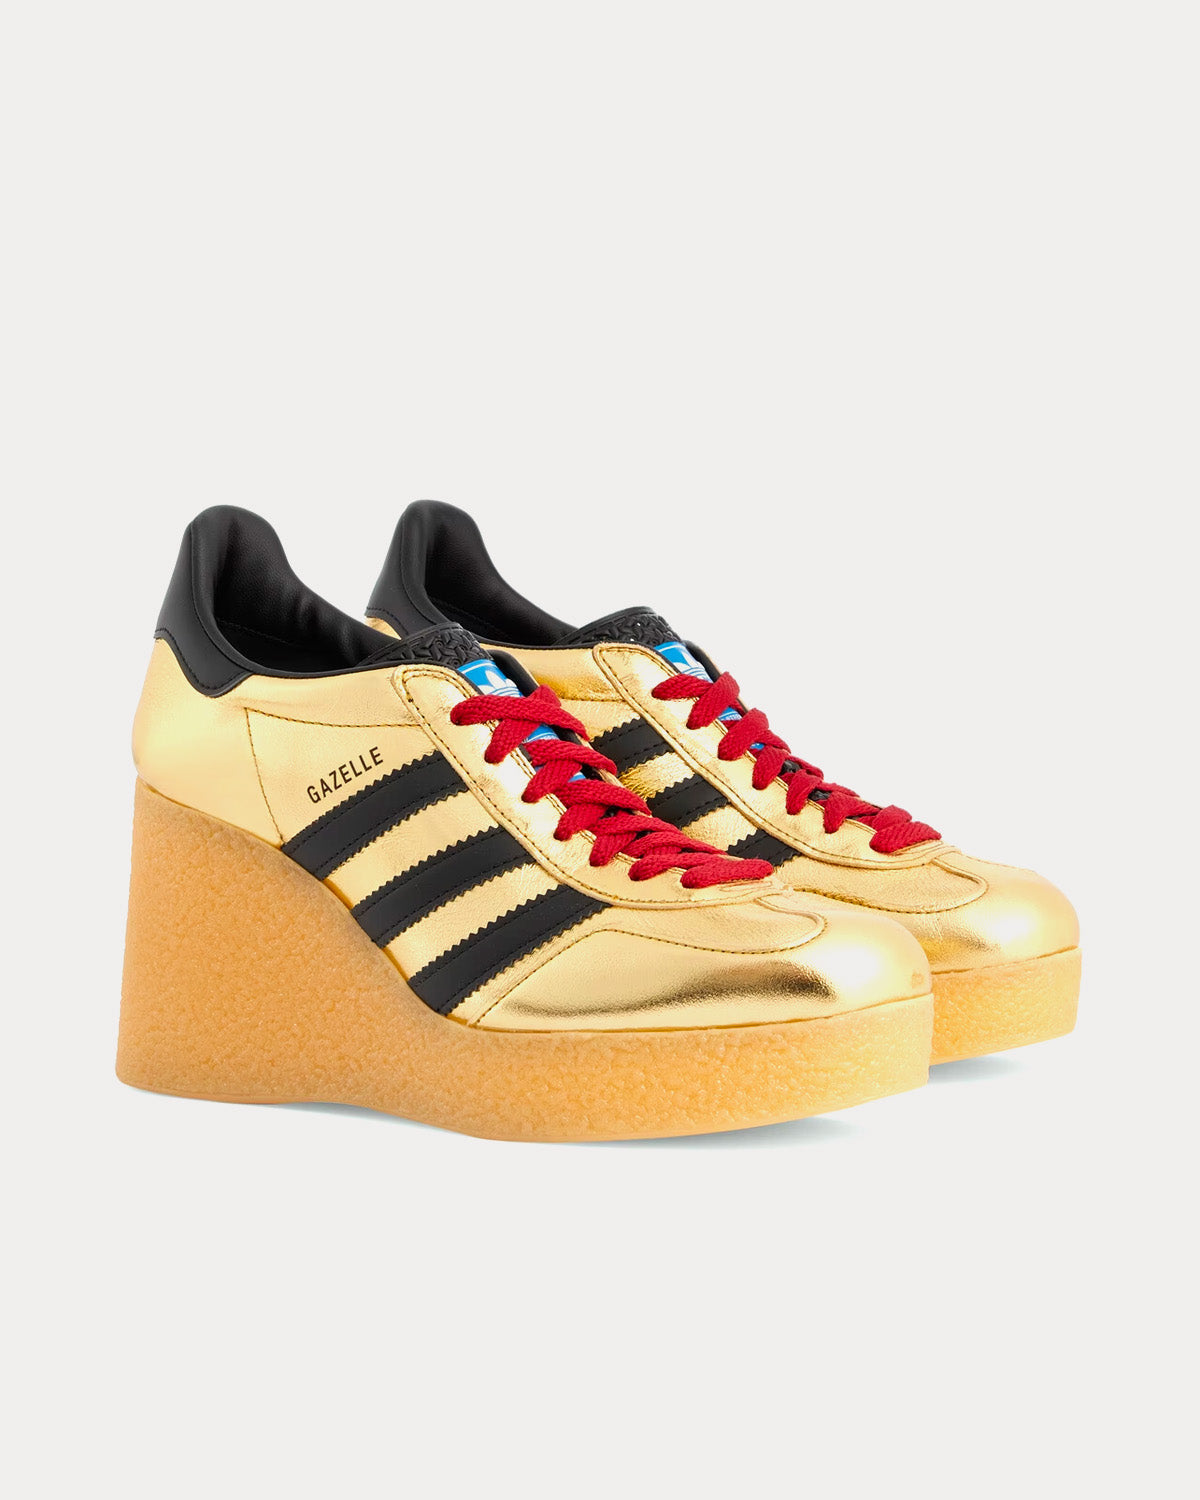 Adidas x Gucci - Gazelle Wedge Metallic Gold Low Top Sneakers